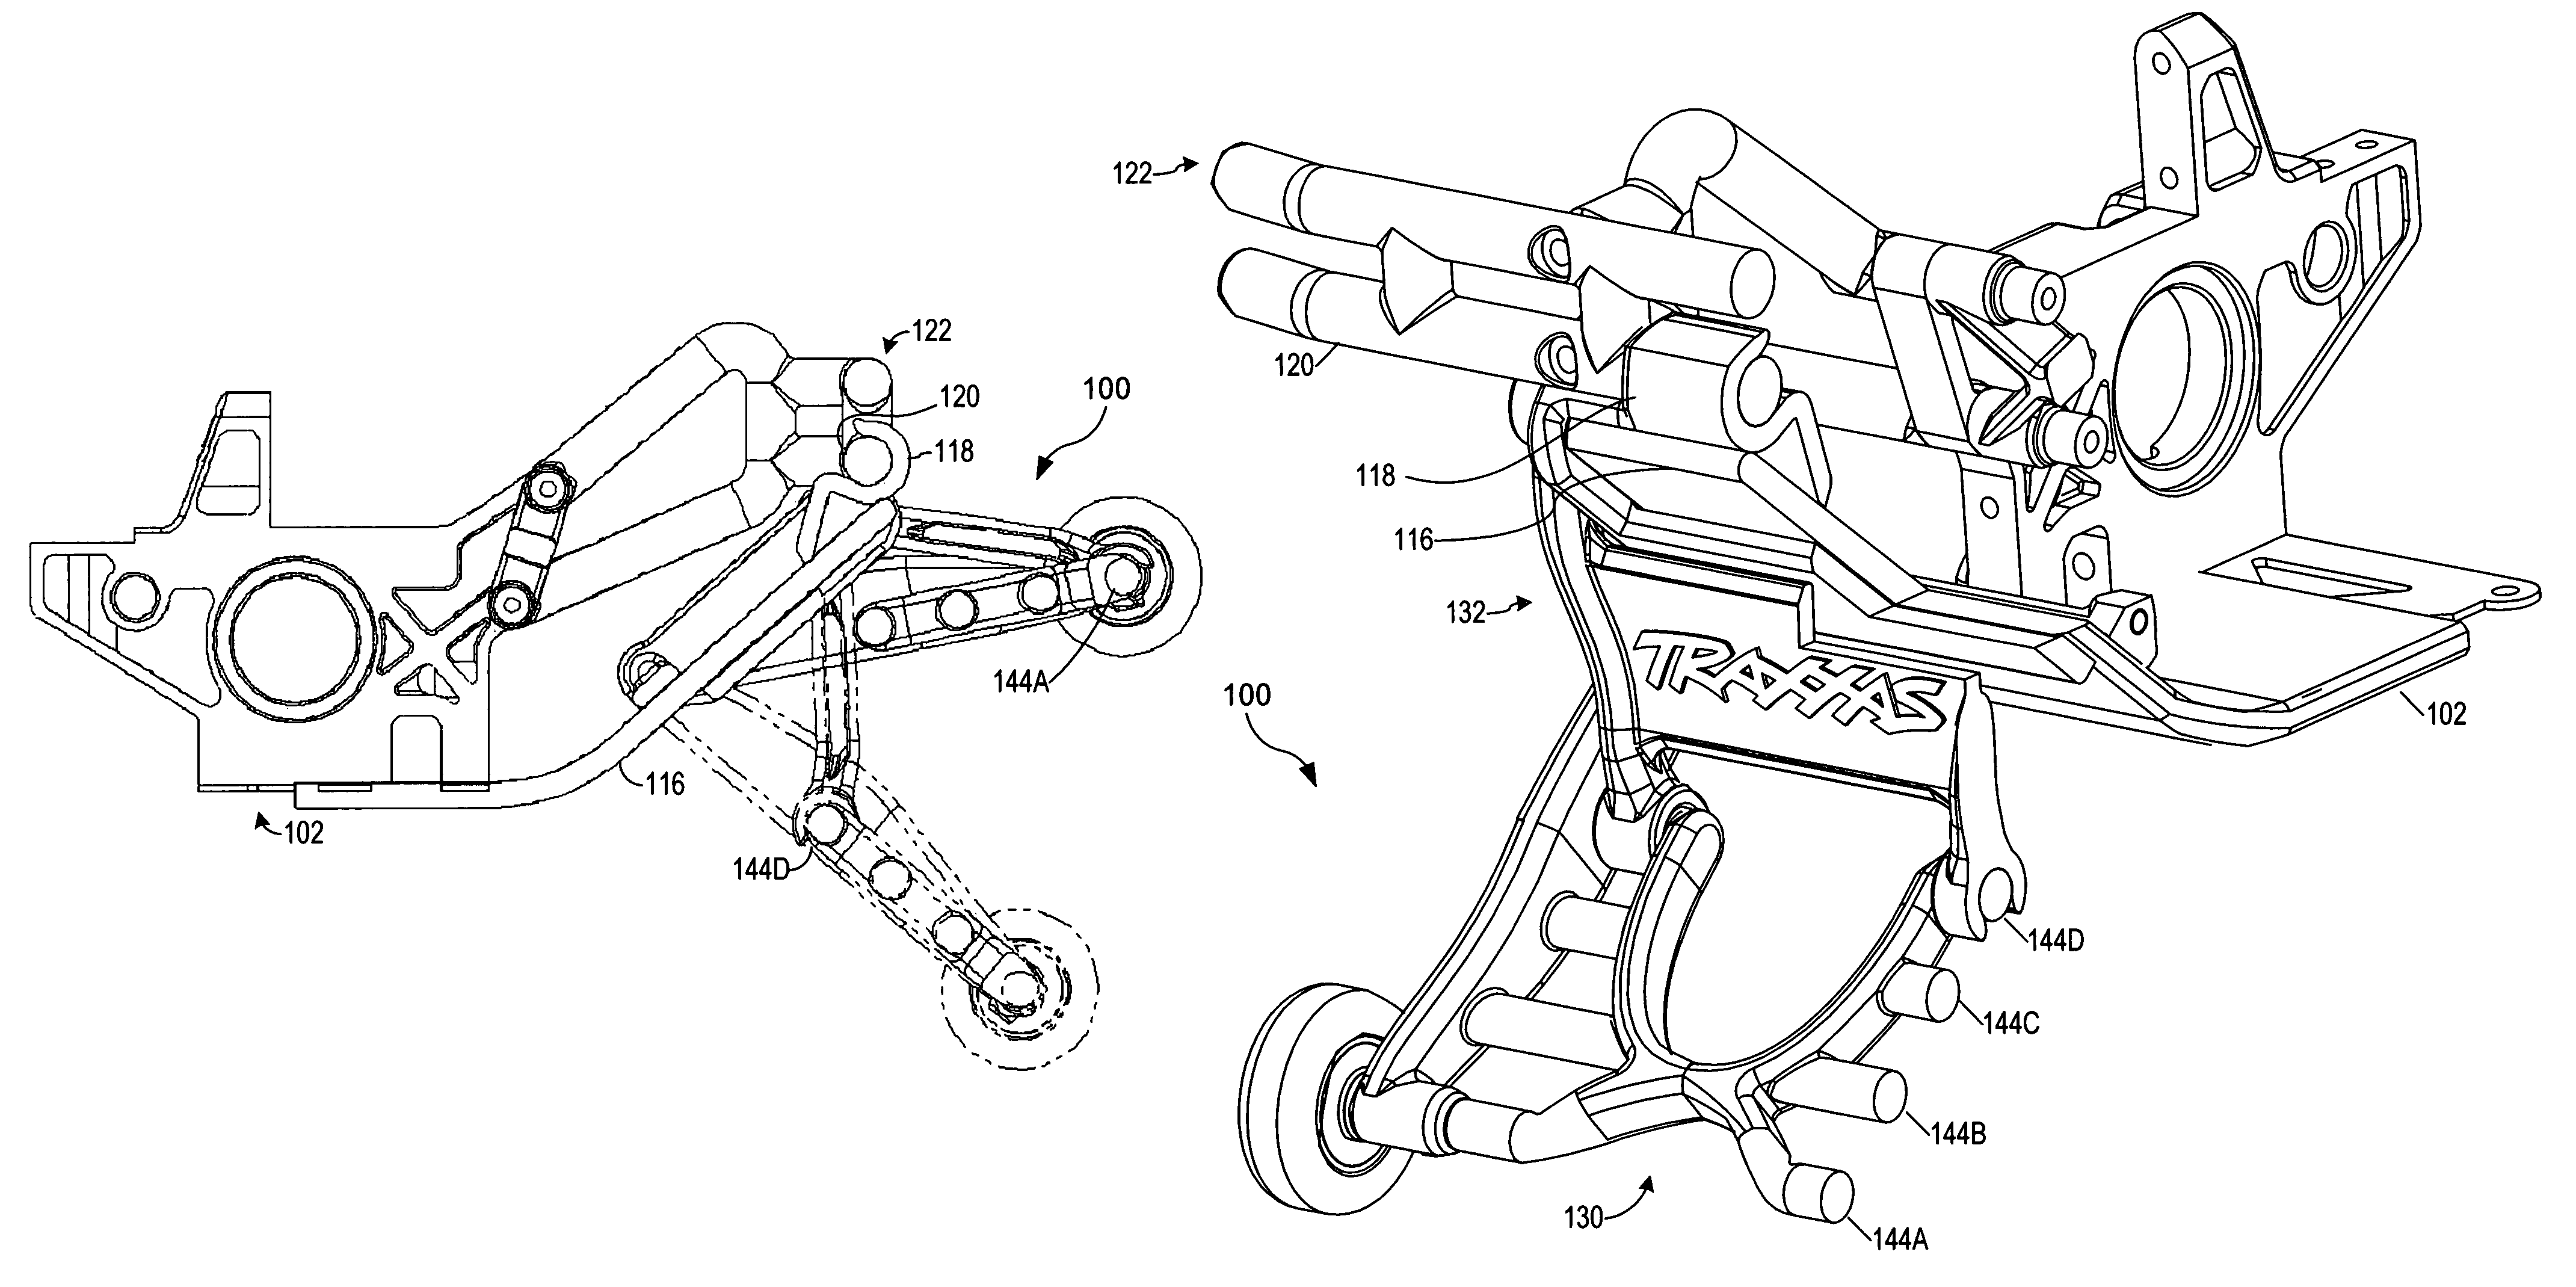 Wheelie bar apparatus for a model vehicle